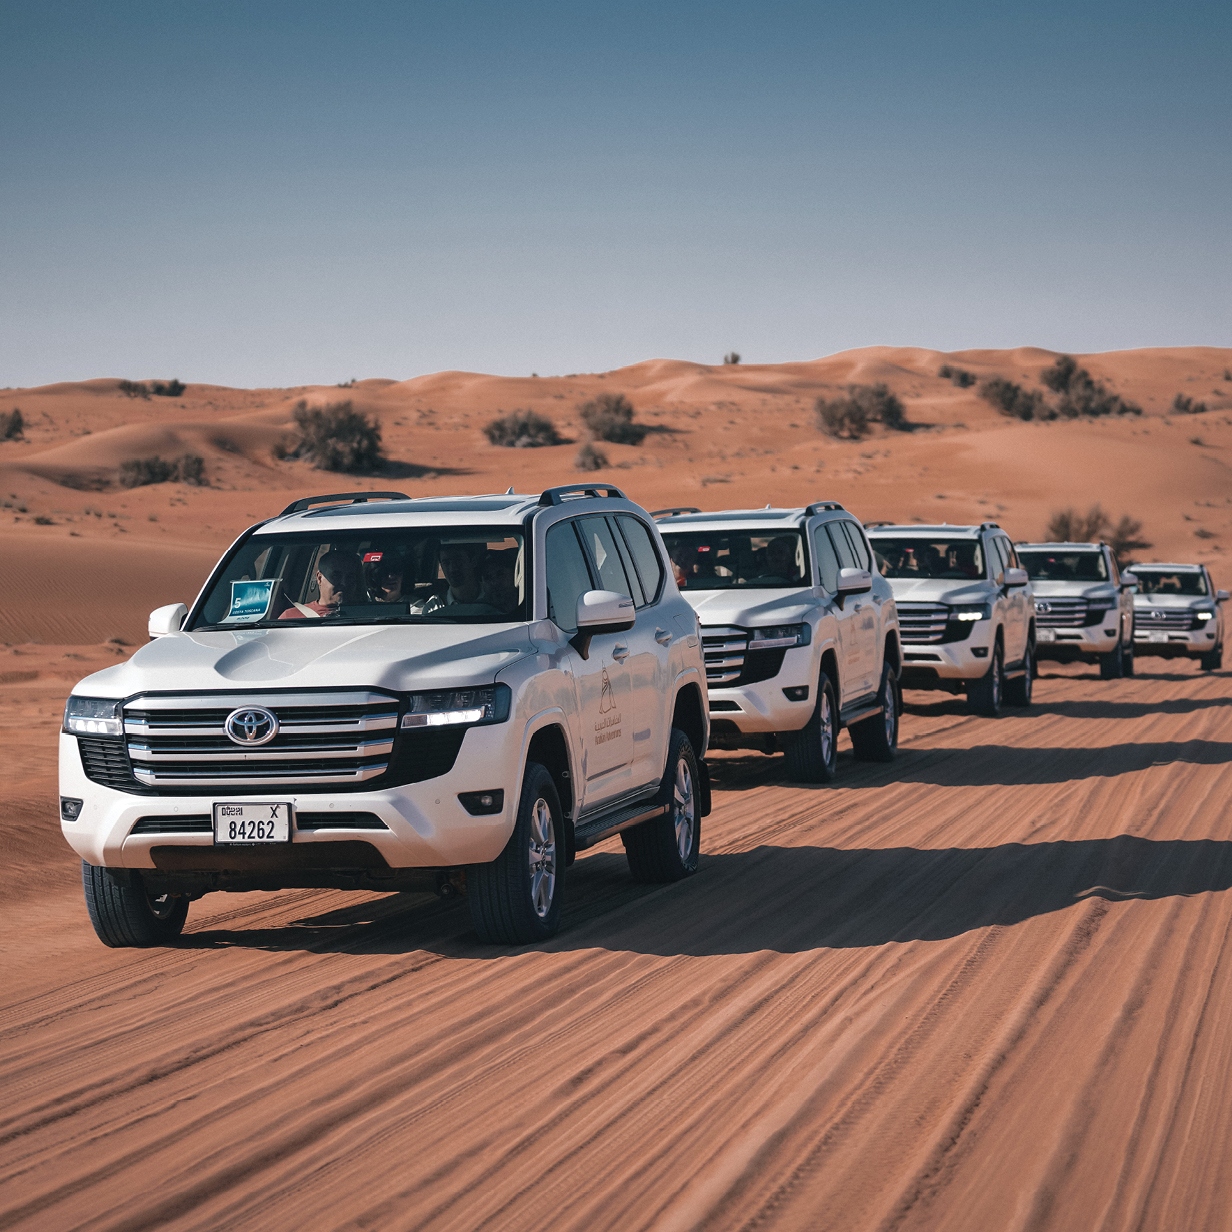 Evening Desert Safari in Dubai - Private Vehicle, , large